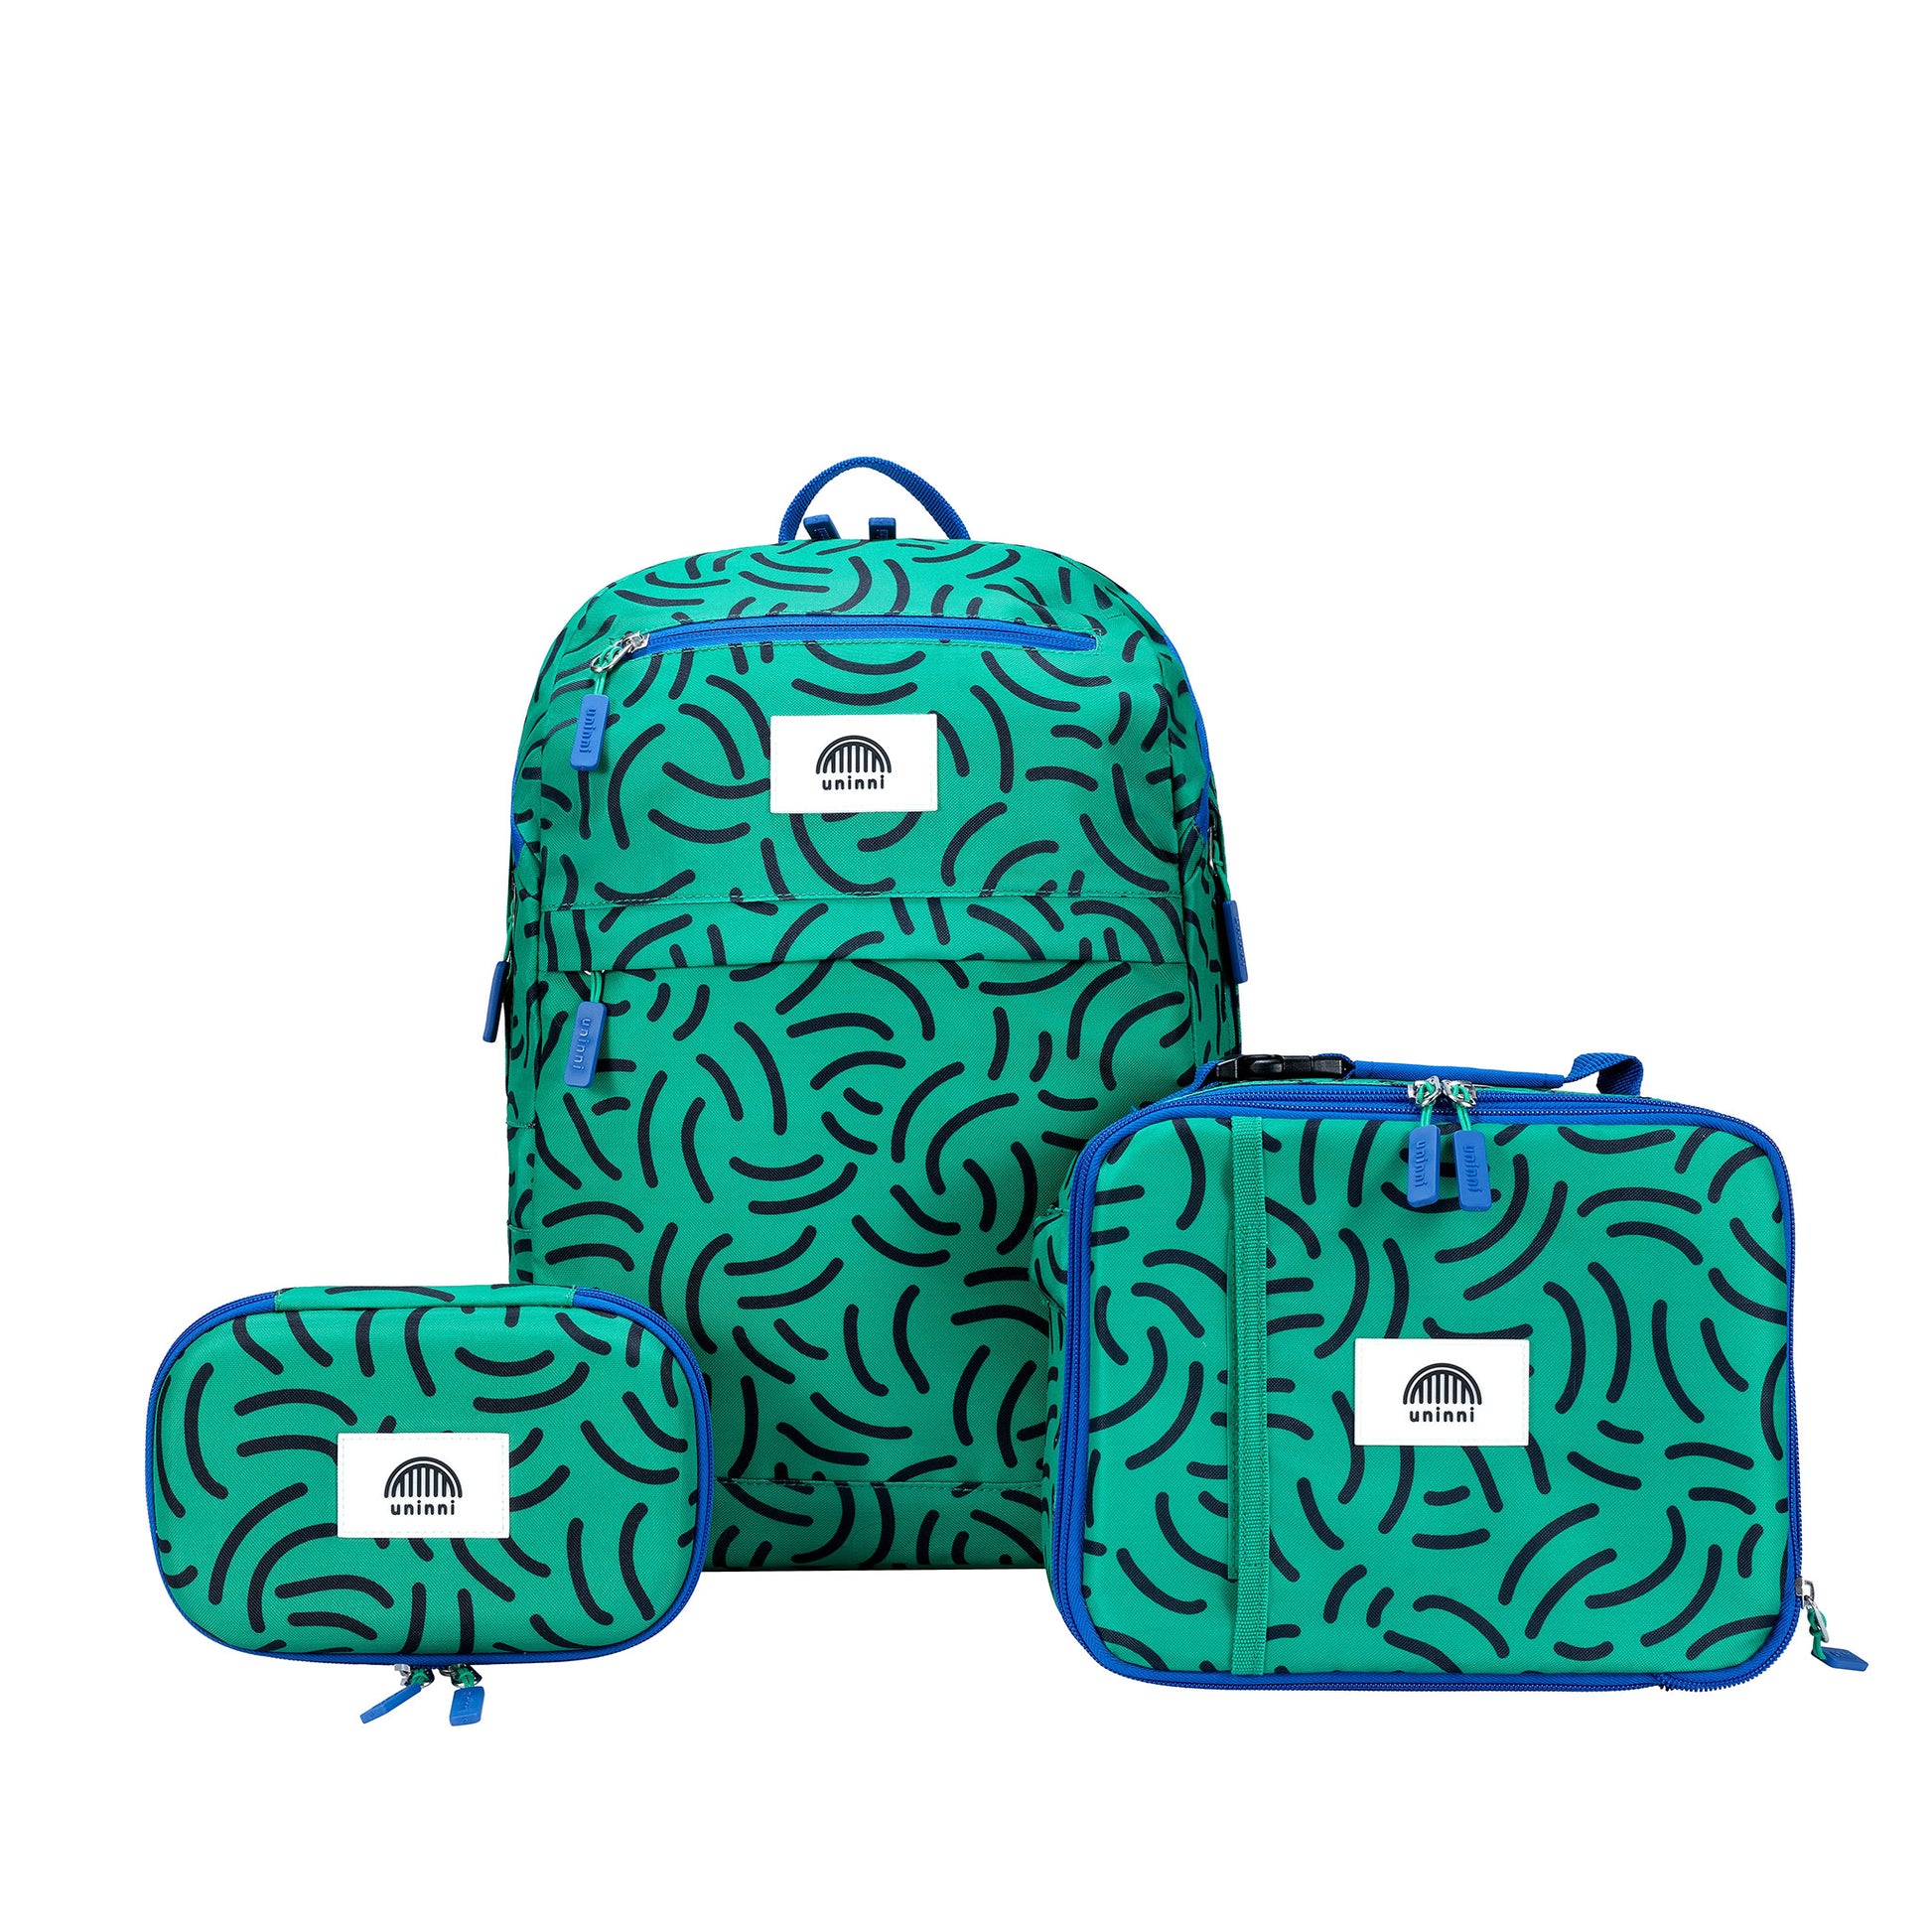 Spanks Bags & Backpacks, Unique Designs